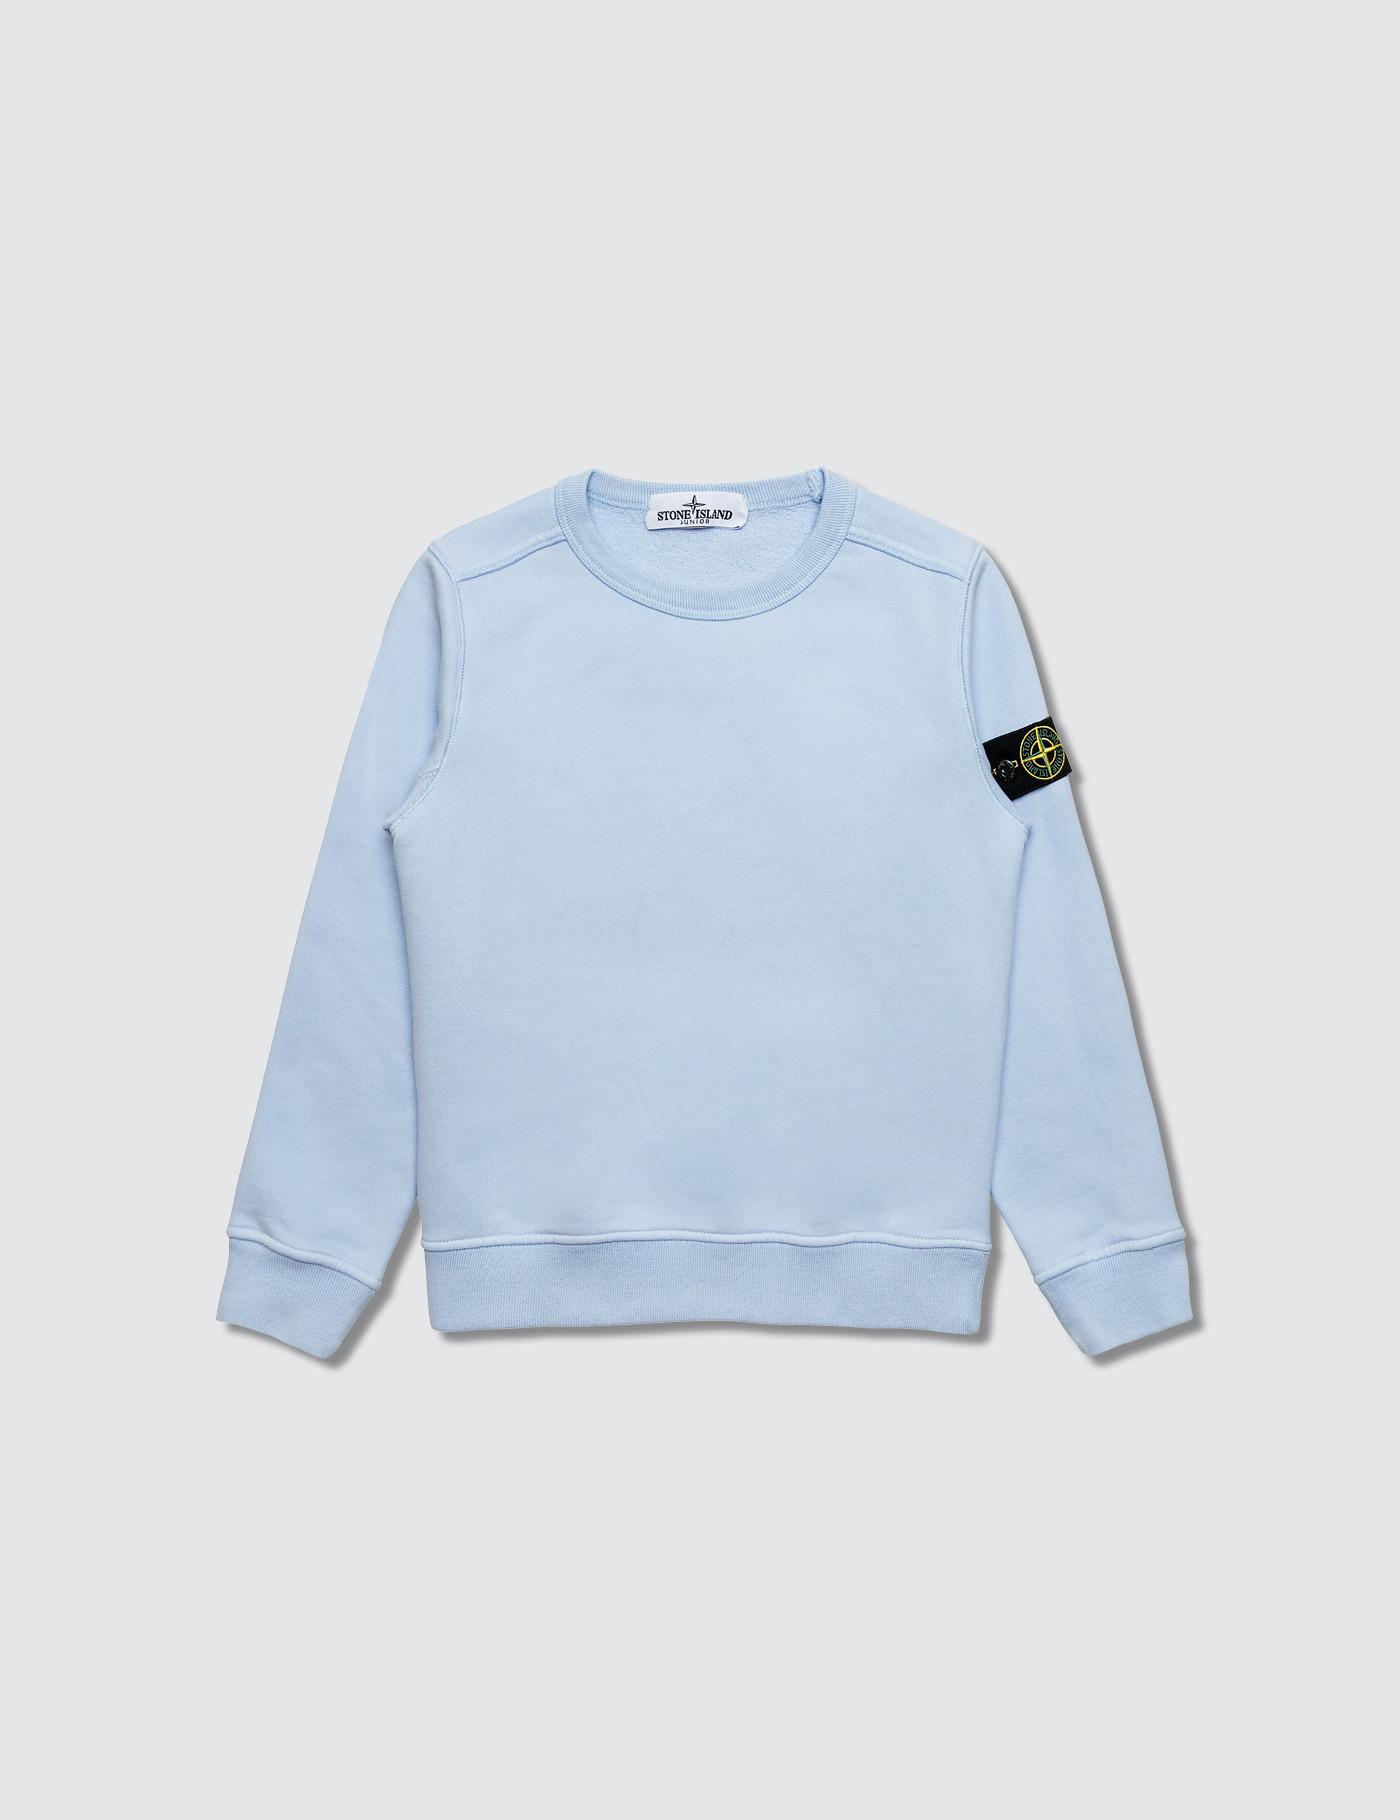 Parity > light blue stone island sweatshirt, Up to 70% OFF